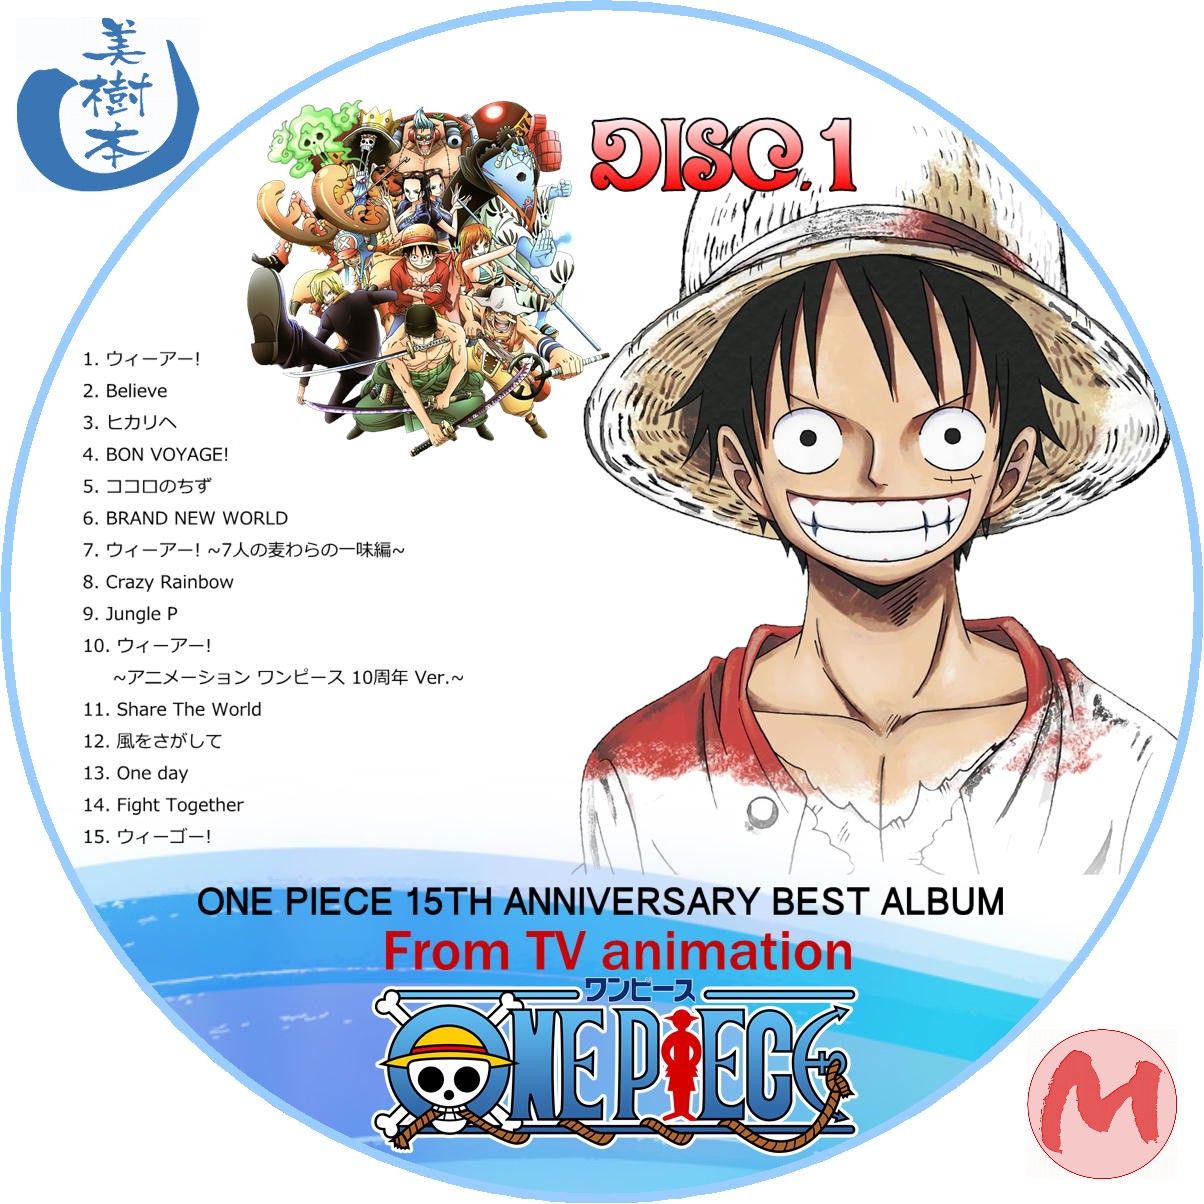 One Piece 15th Anniversary Best Album 自己れ べる